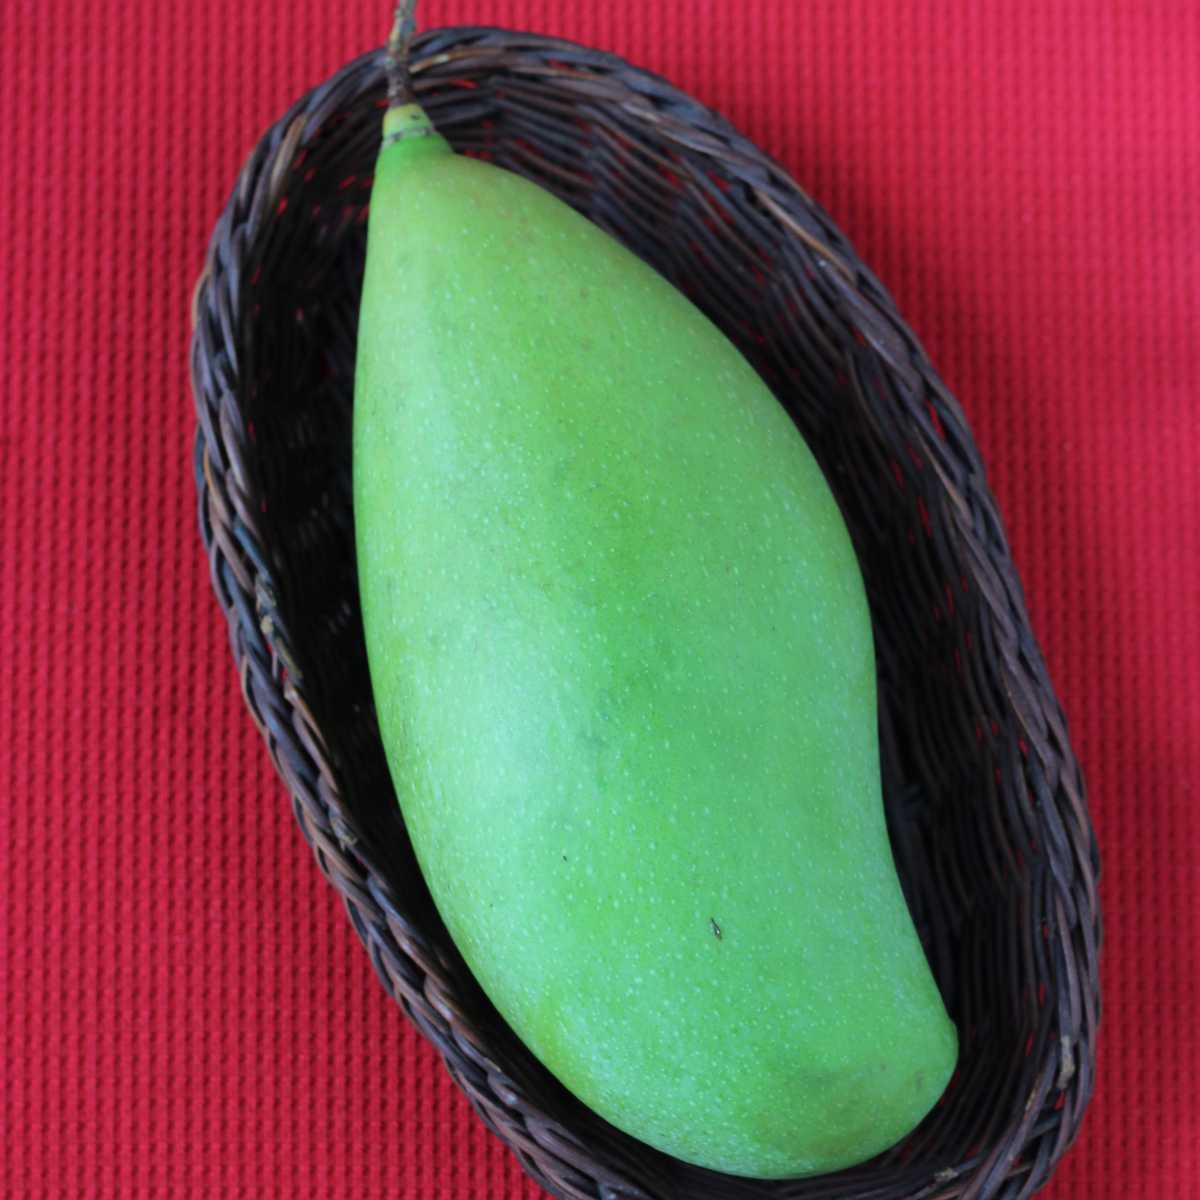 green mango used to make mango rice